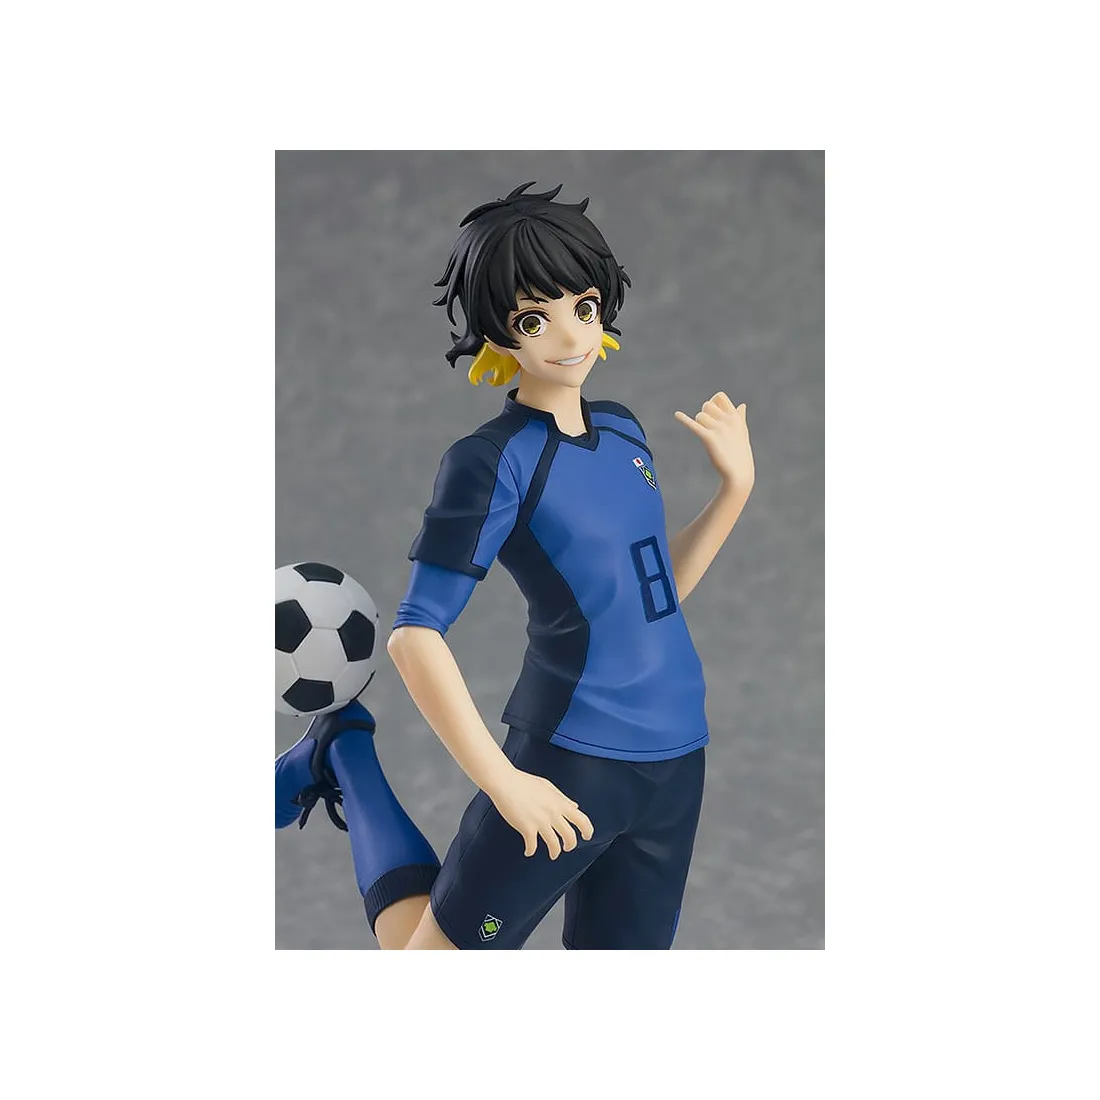 AmiAmi [Character & Hobby Shop]  Bluelock Pencil Board Meguru